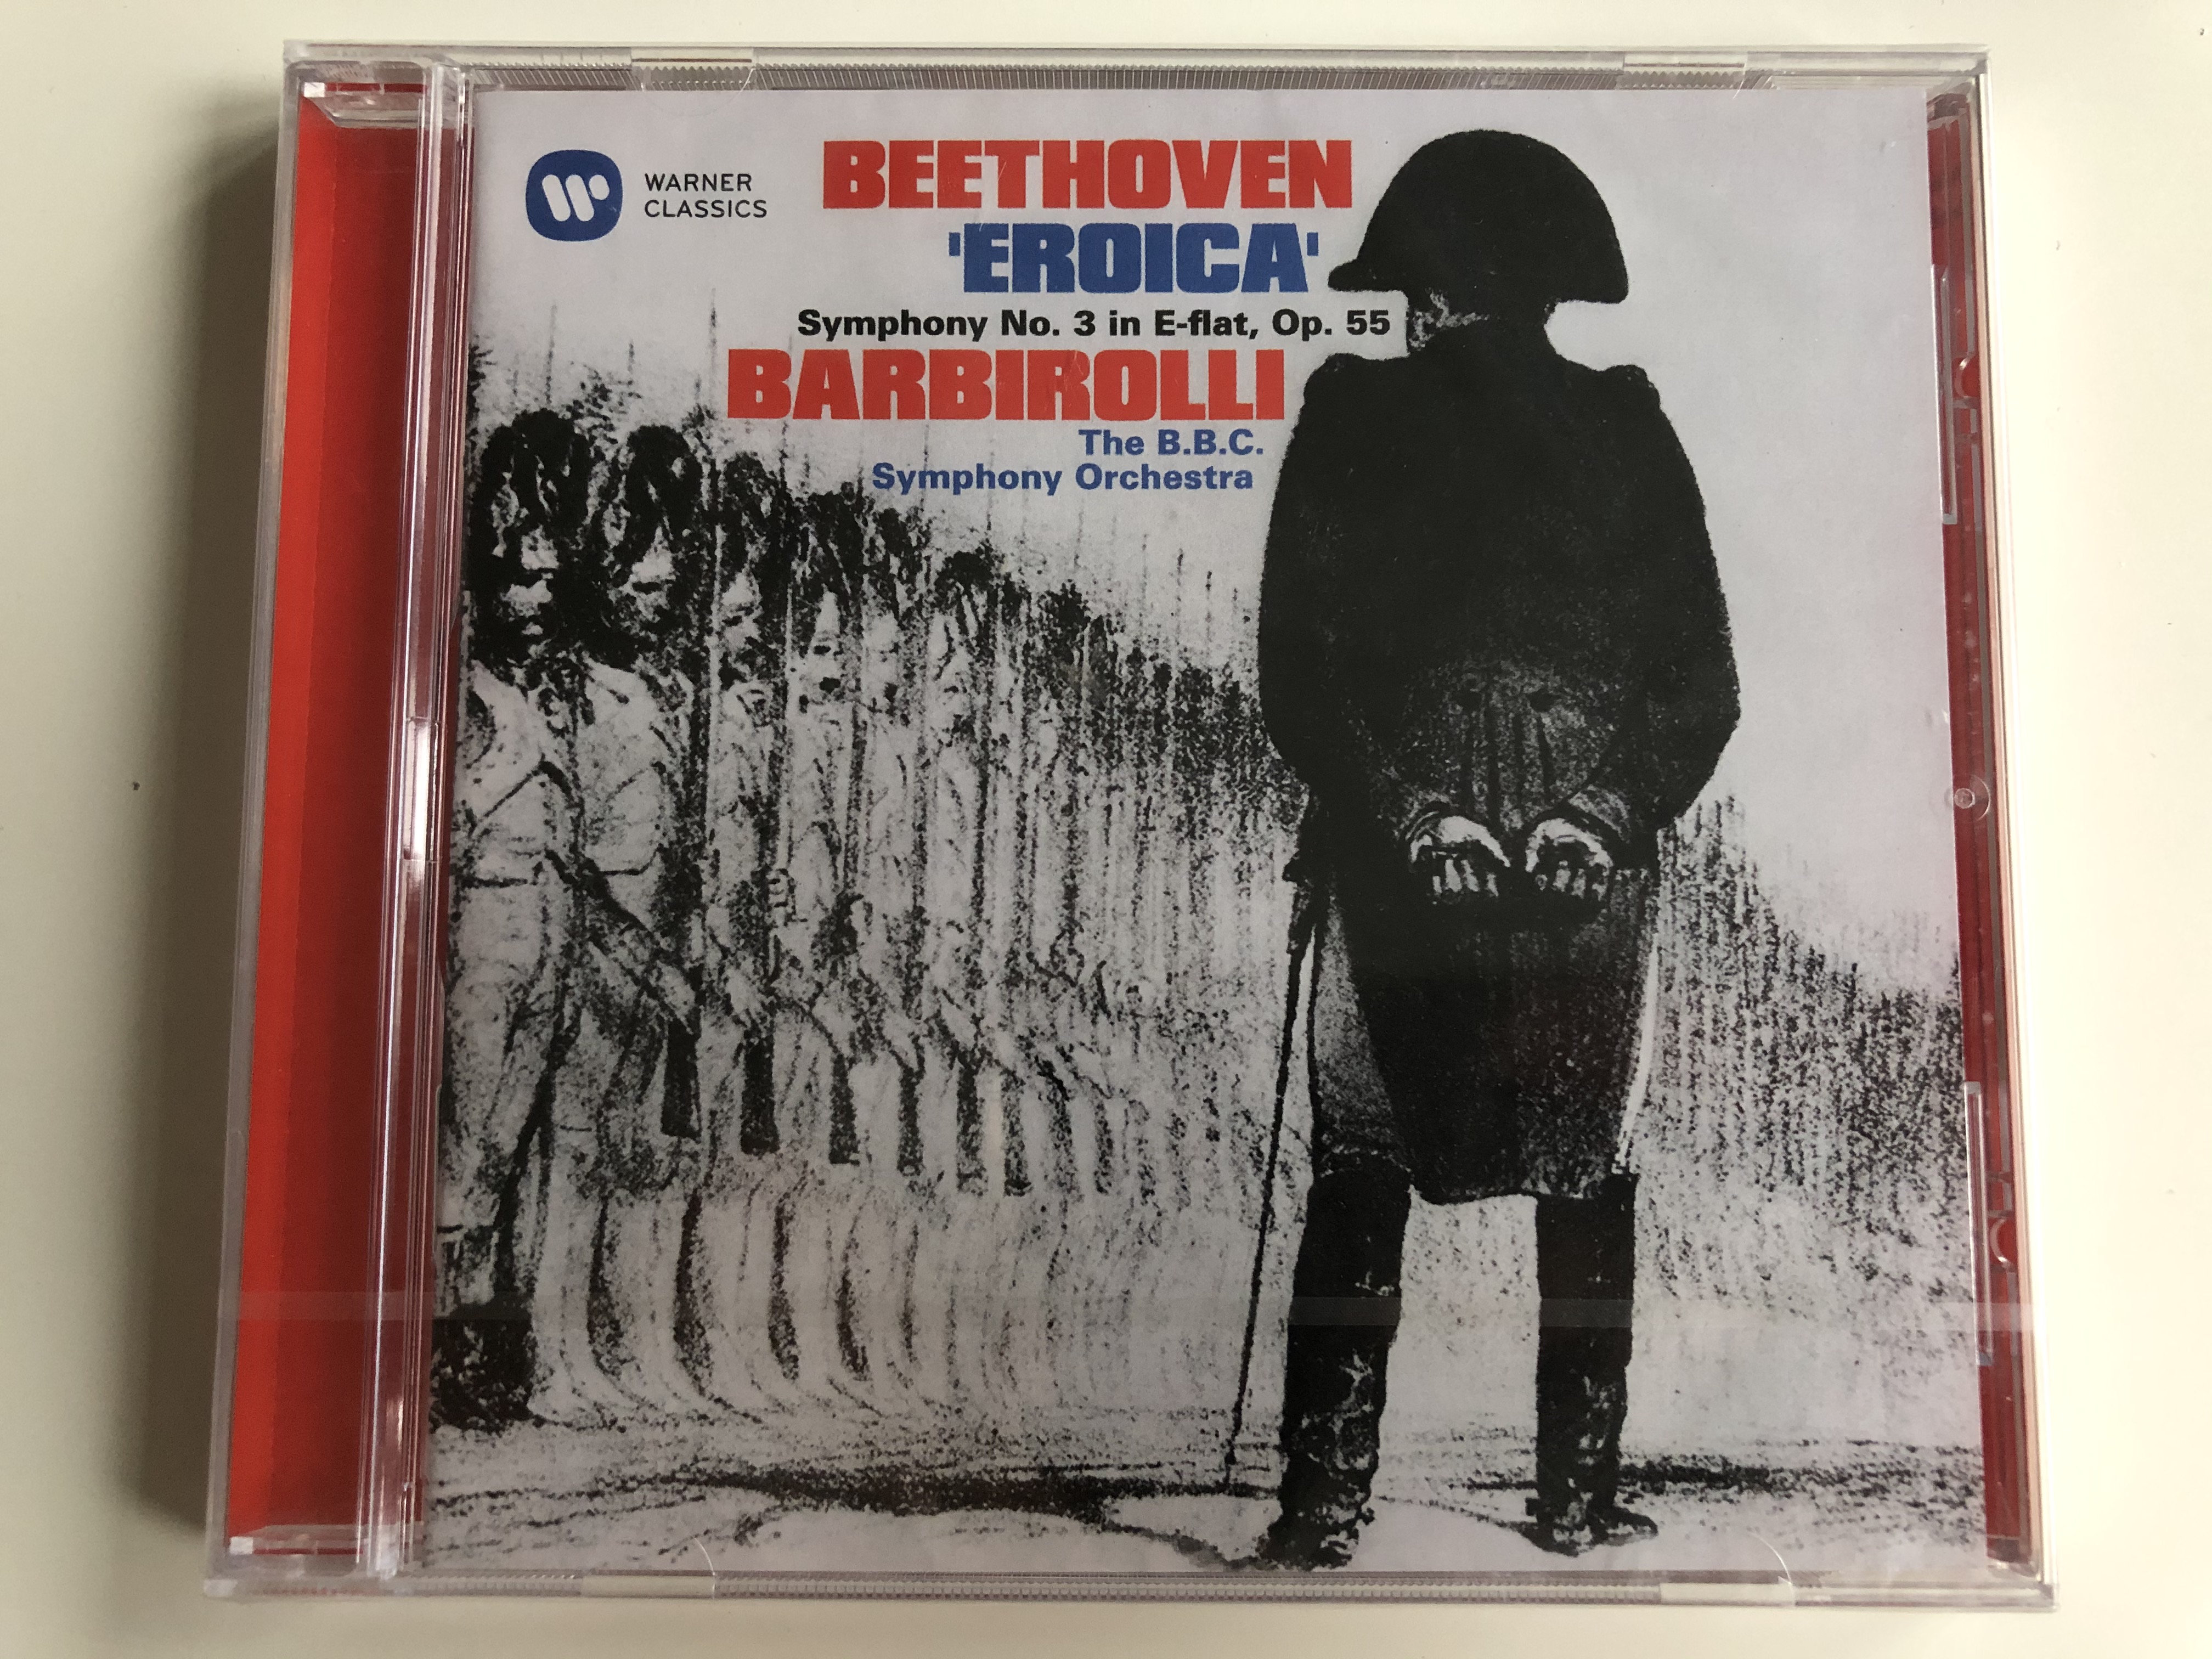 beethoven-eroica-symphony-no.-3-in-e-flat-op.-55-barbirolli-the-b.b.c-symphony-orchestra-warner-classics-audio-cd-2018-stereo-0190295739980-1-.jpg